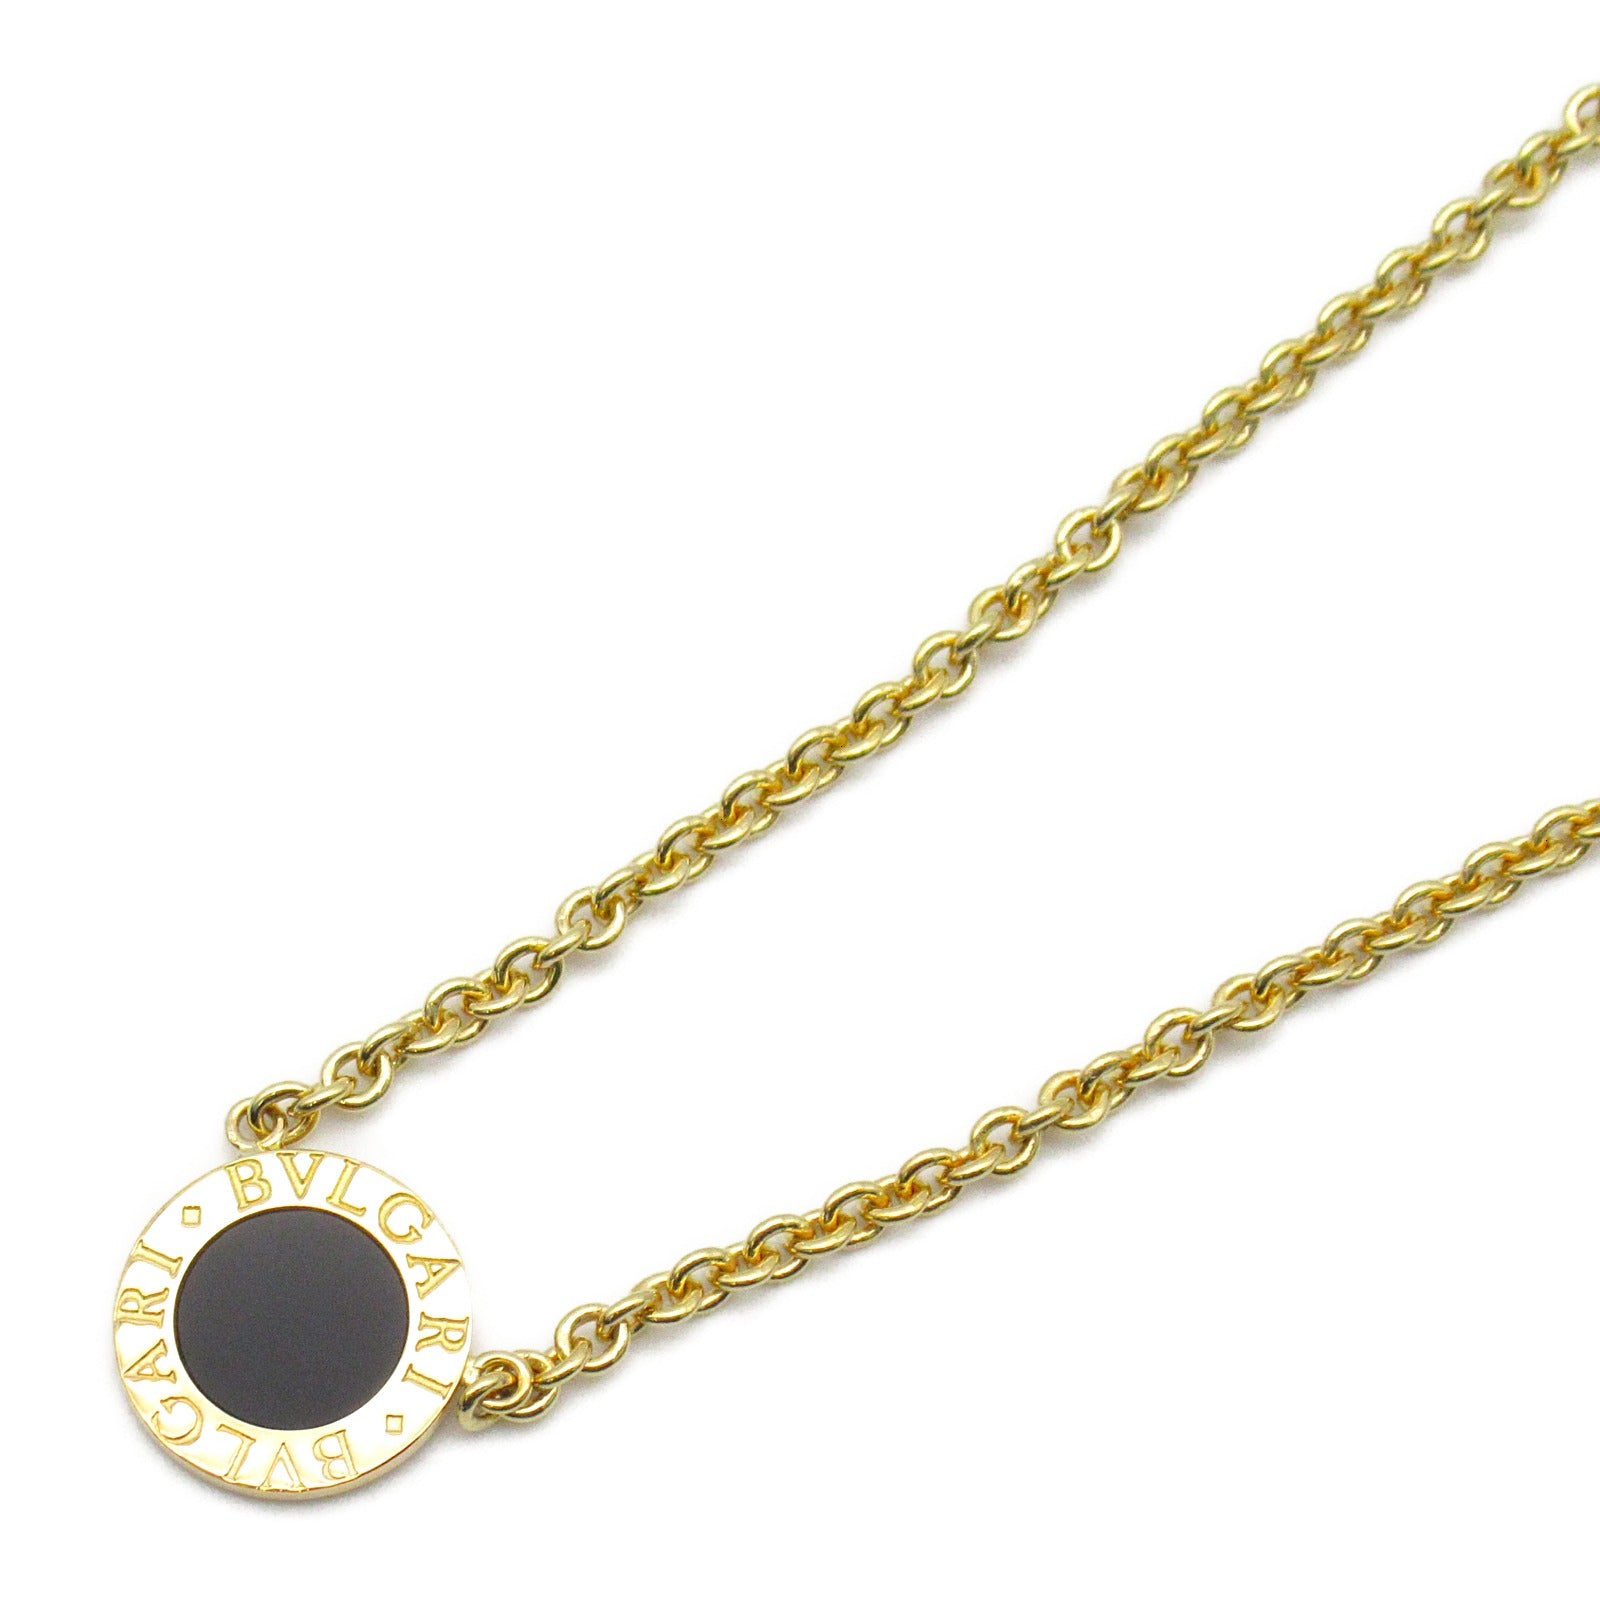 Bulgari BVLGARI n Onyx necklace necklace jewelry K18 (yellow g) Onyx  Black